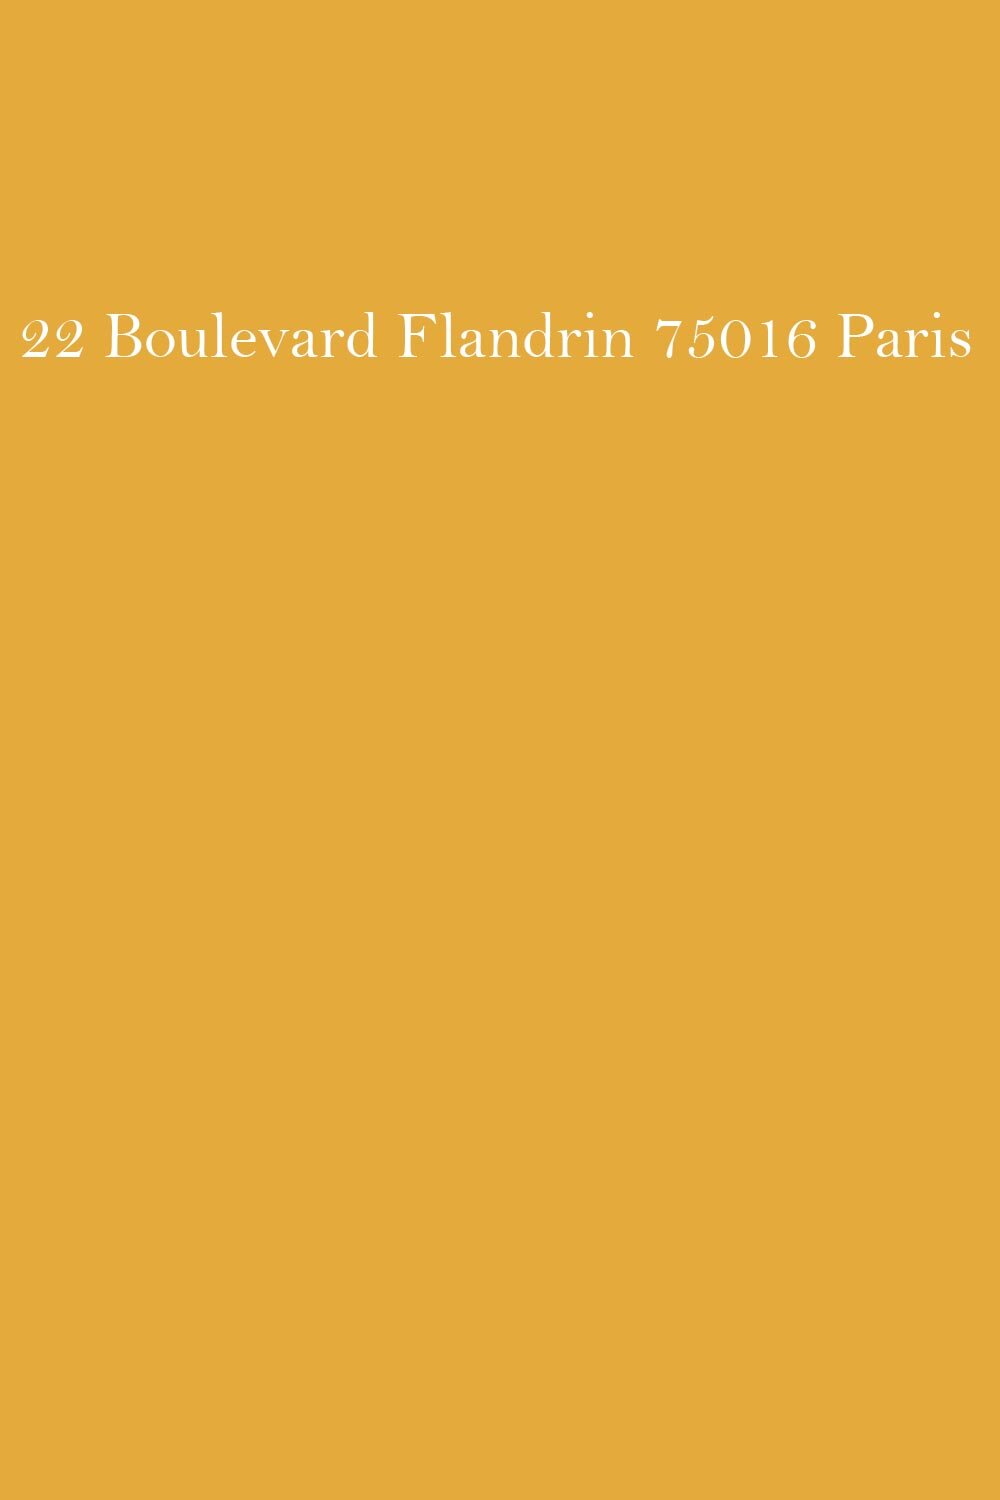 22-blvd-flandrin-paris-book-cover.jpg